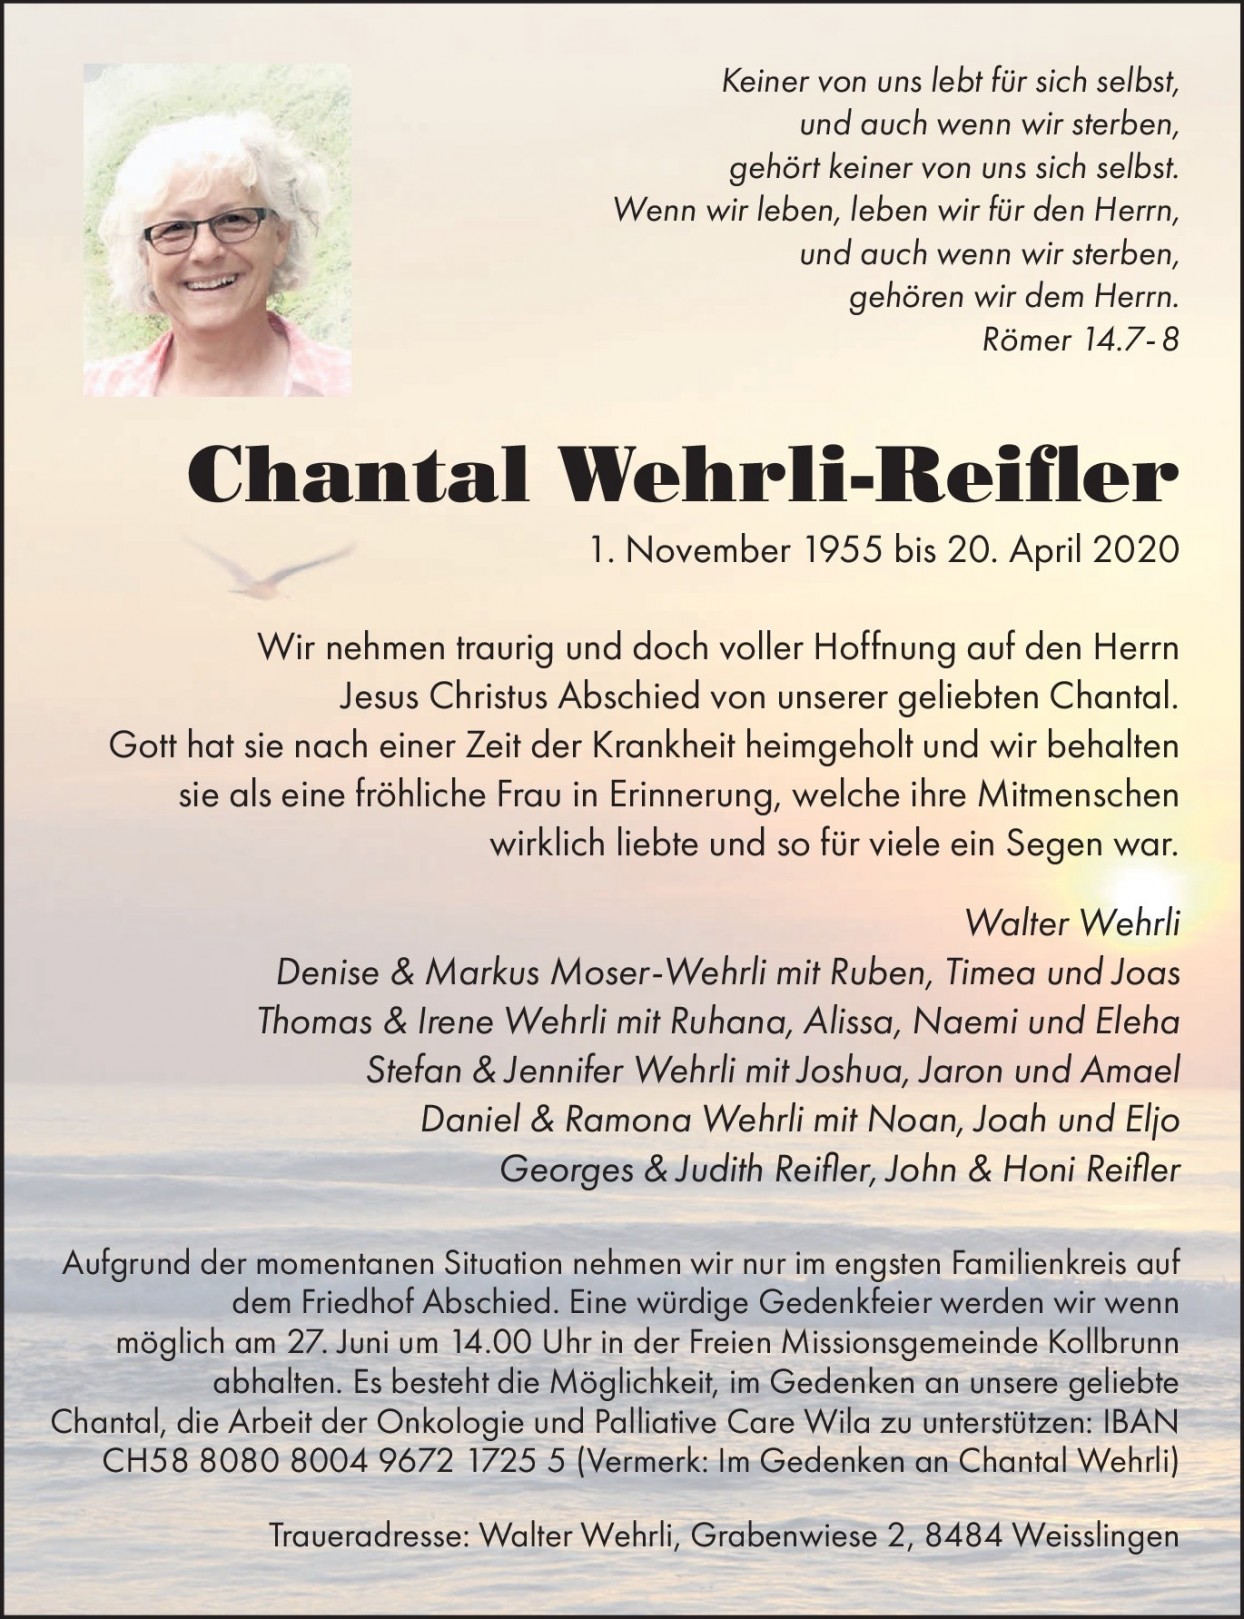 Chantal Wehrli-Reifler